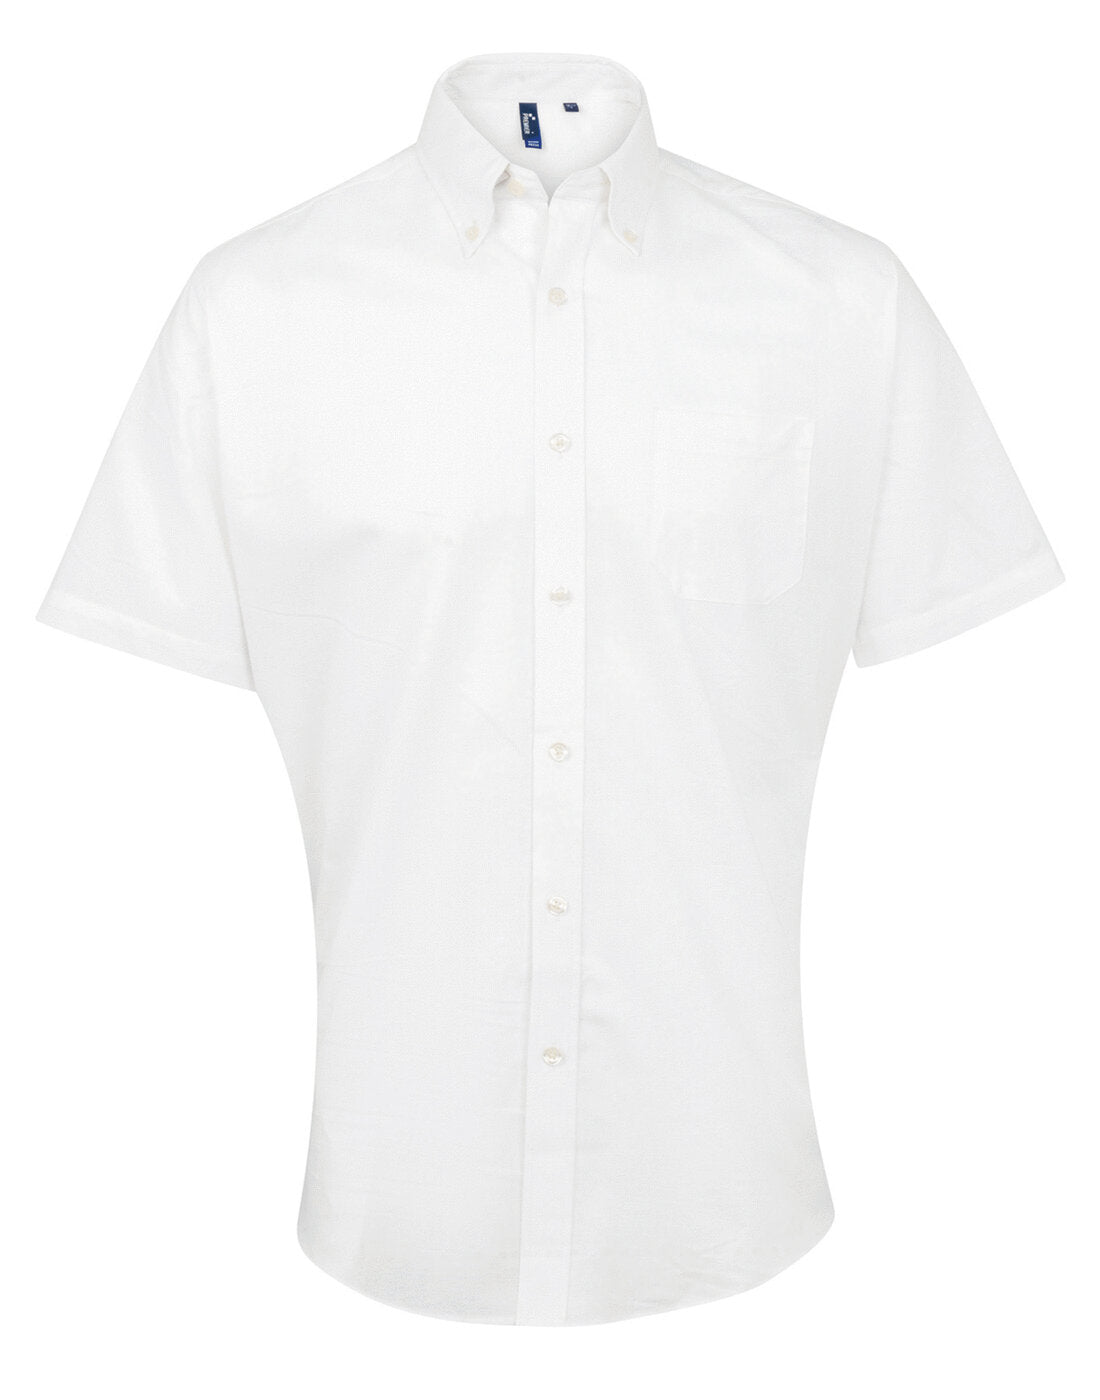 Men's Short Sleeve Signature Oxford Shirt